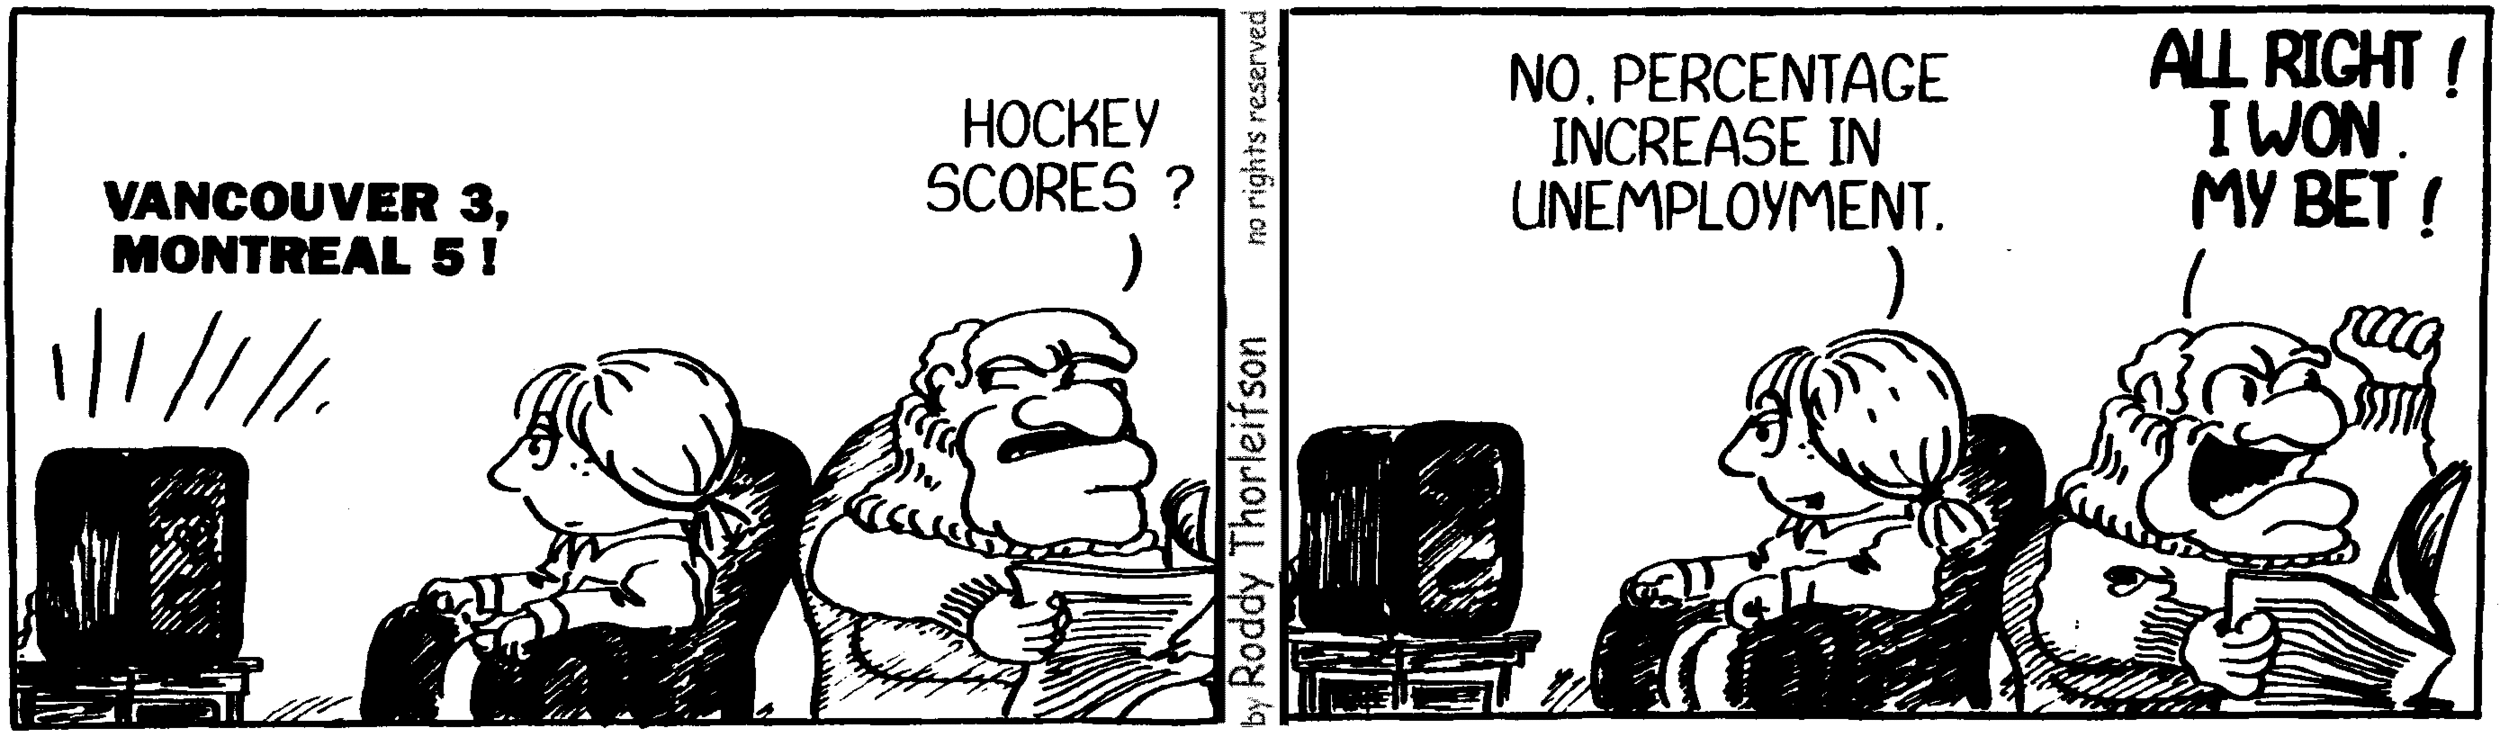 free cartoon Canada Canadian unemployment hockey scores